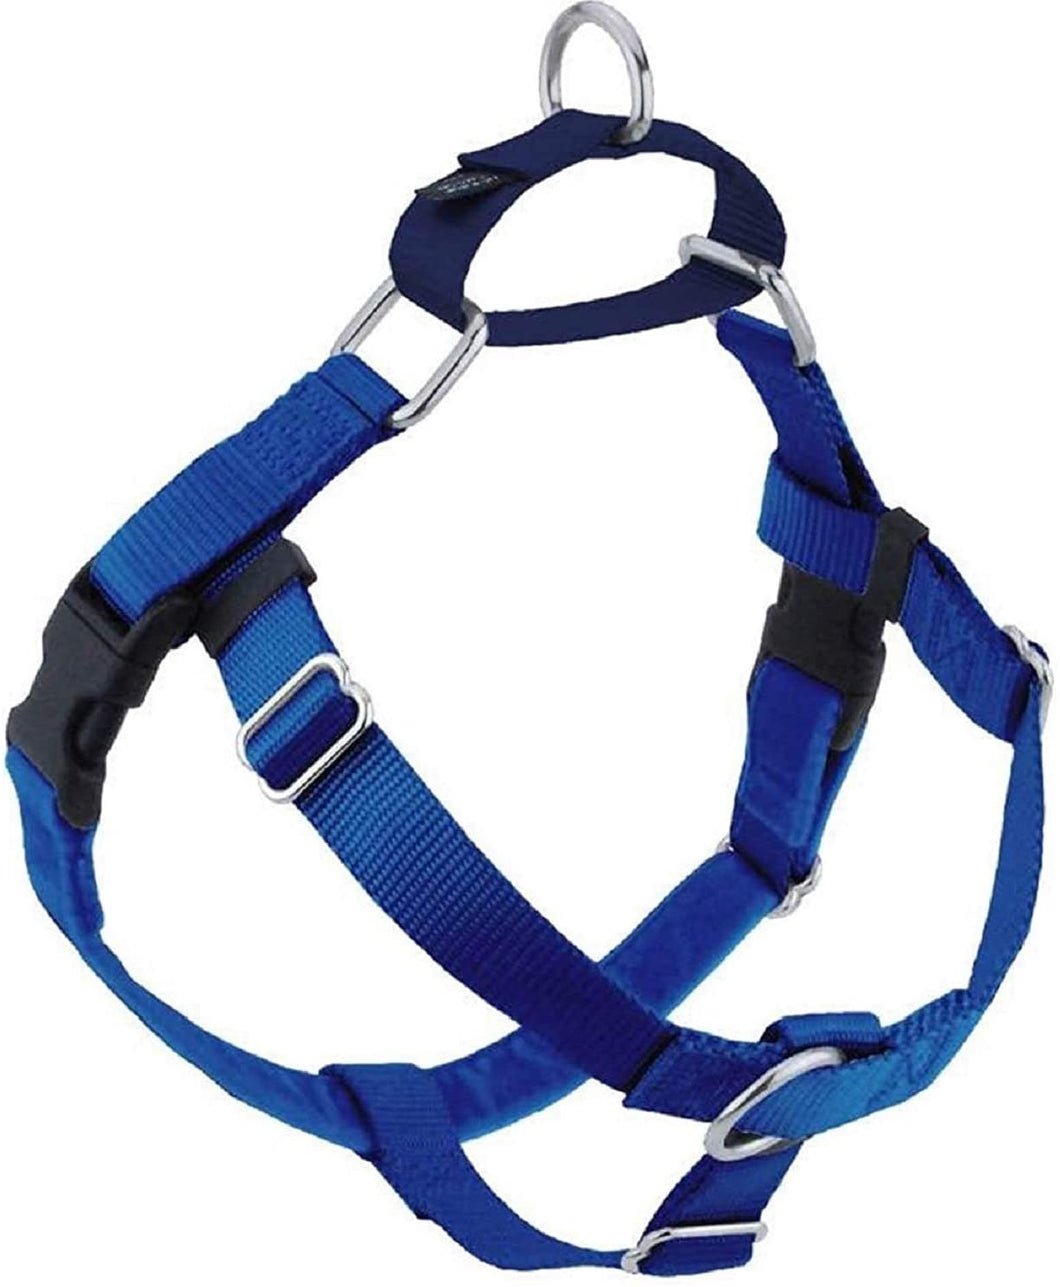 Freedom No-Pull Dog Harness Royal Blue